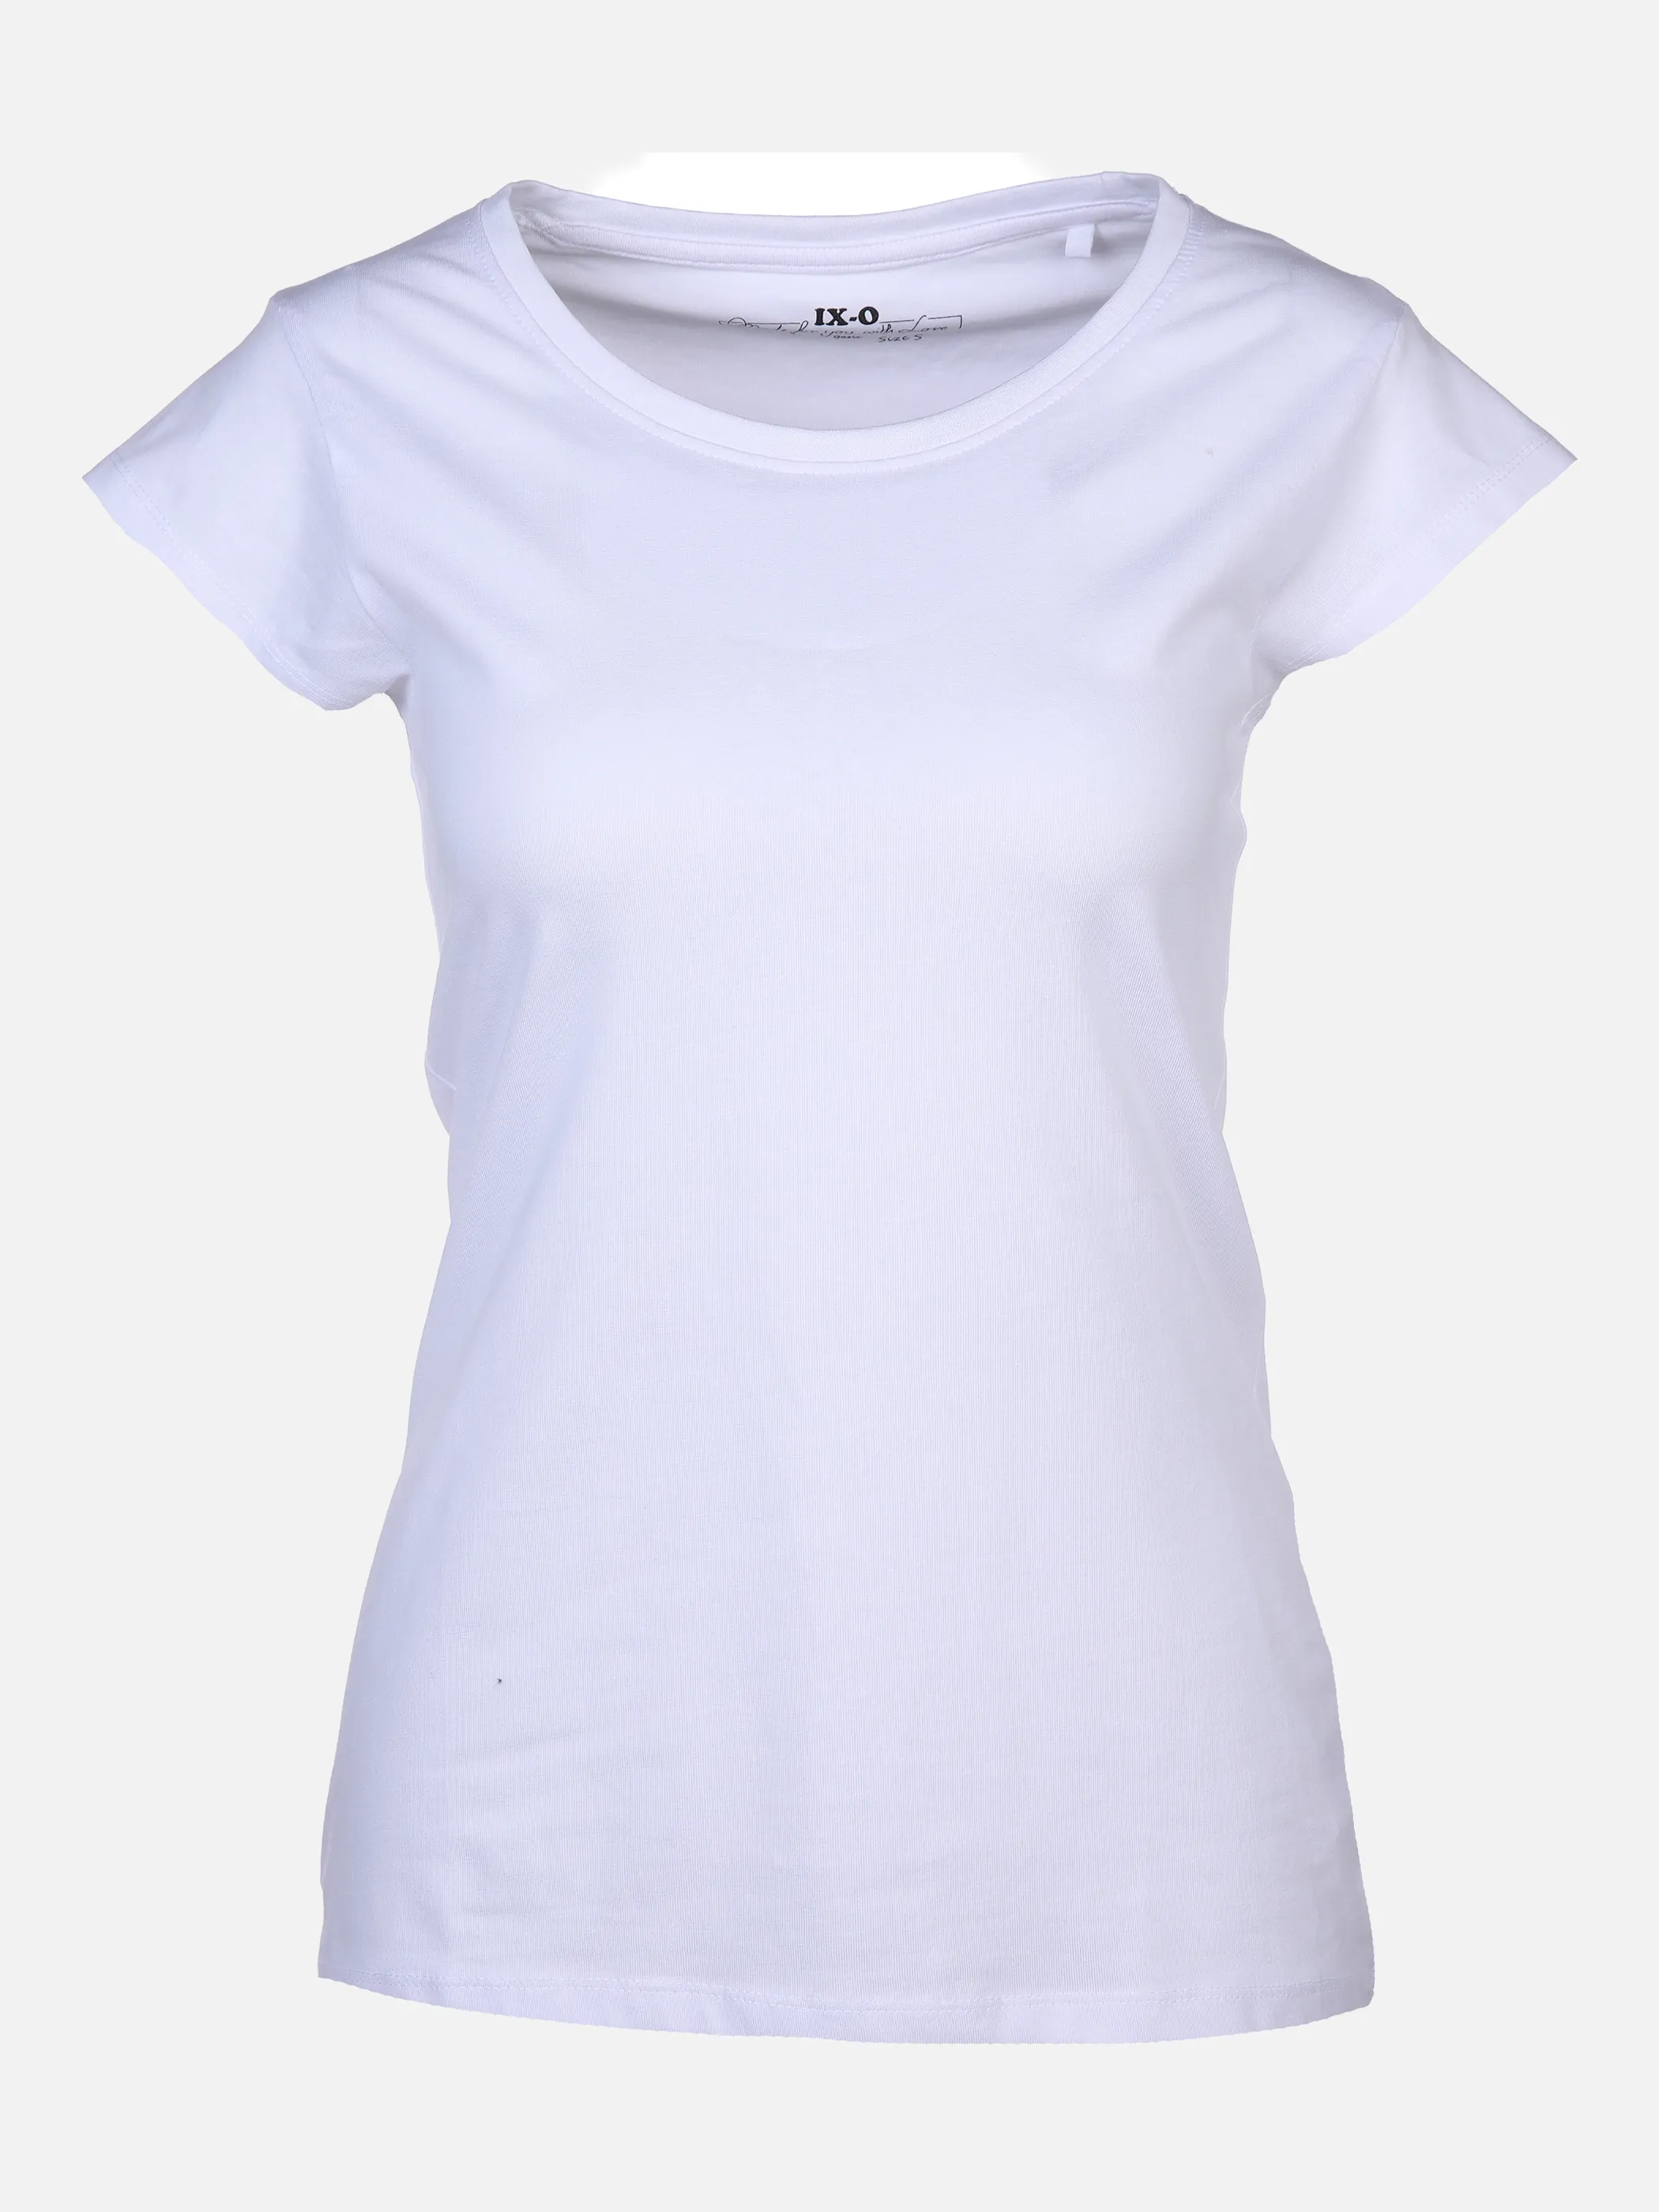 IX-O YF-Da- T-Shirt 1/2 Basic RH Weiß 804314 WHITE 1